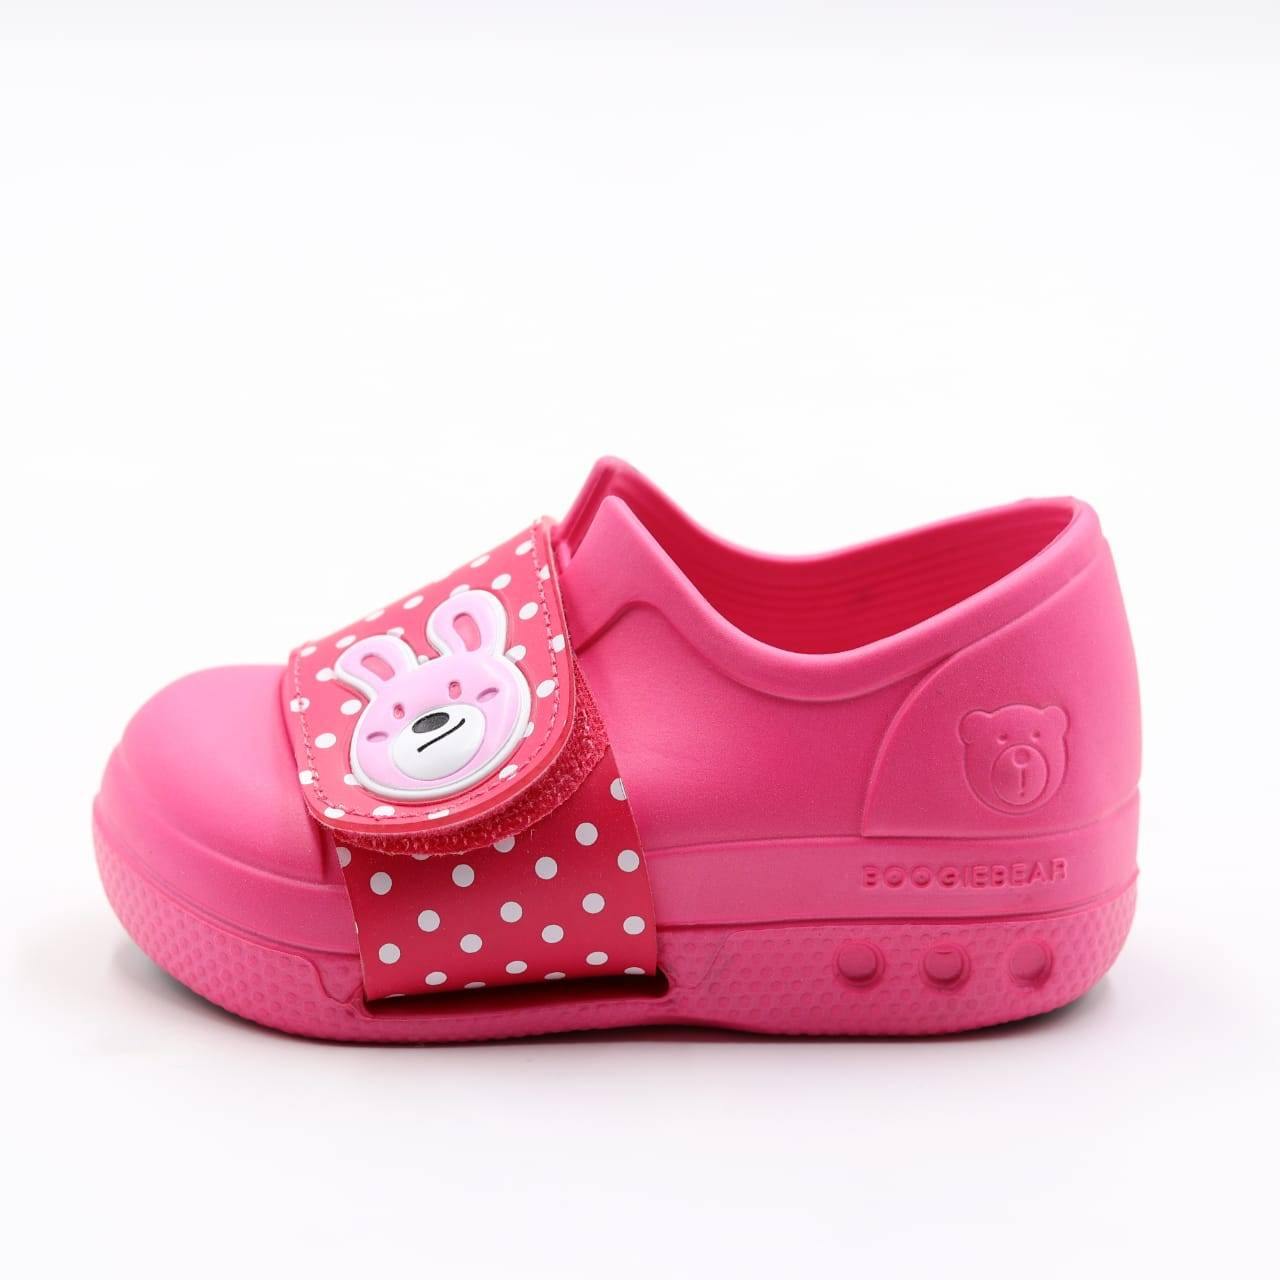 Boogie Bear Kids Shoes 603 - Jango Mall